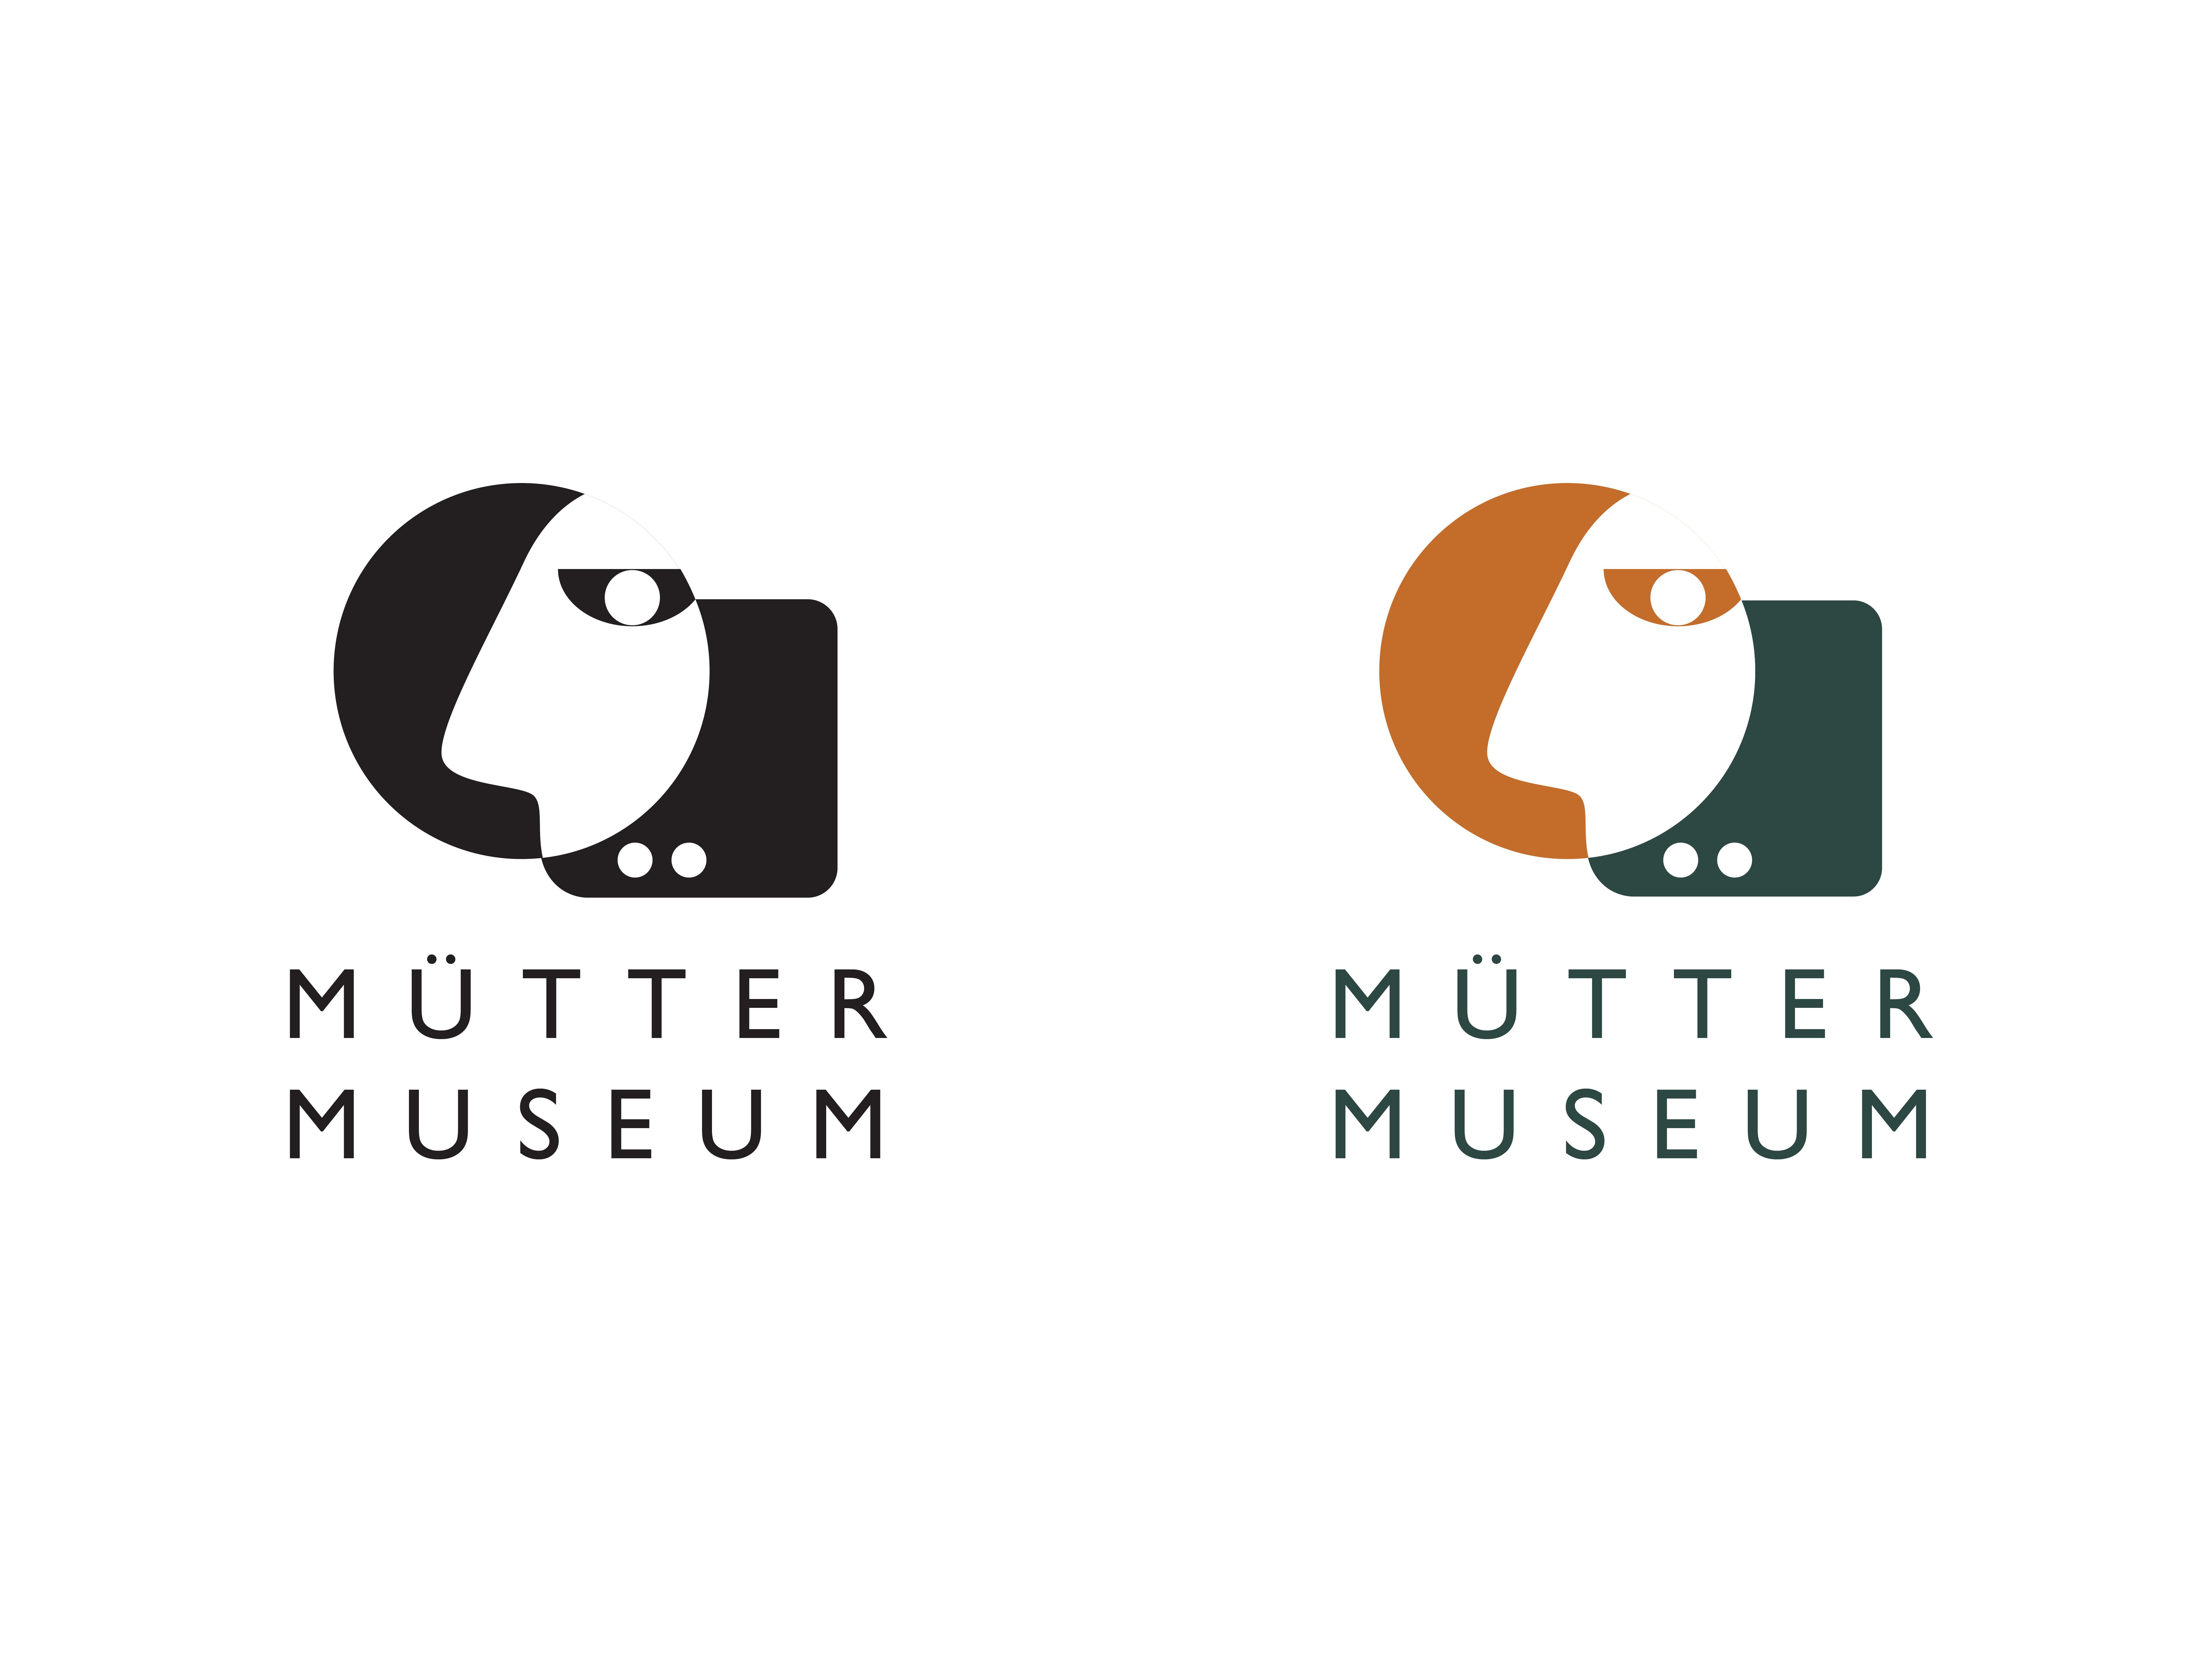 pictorial logomark for mutter museum